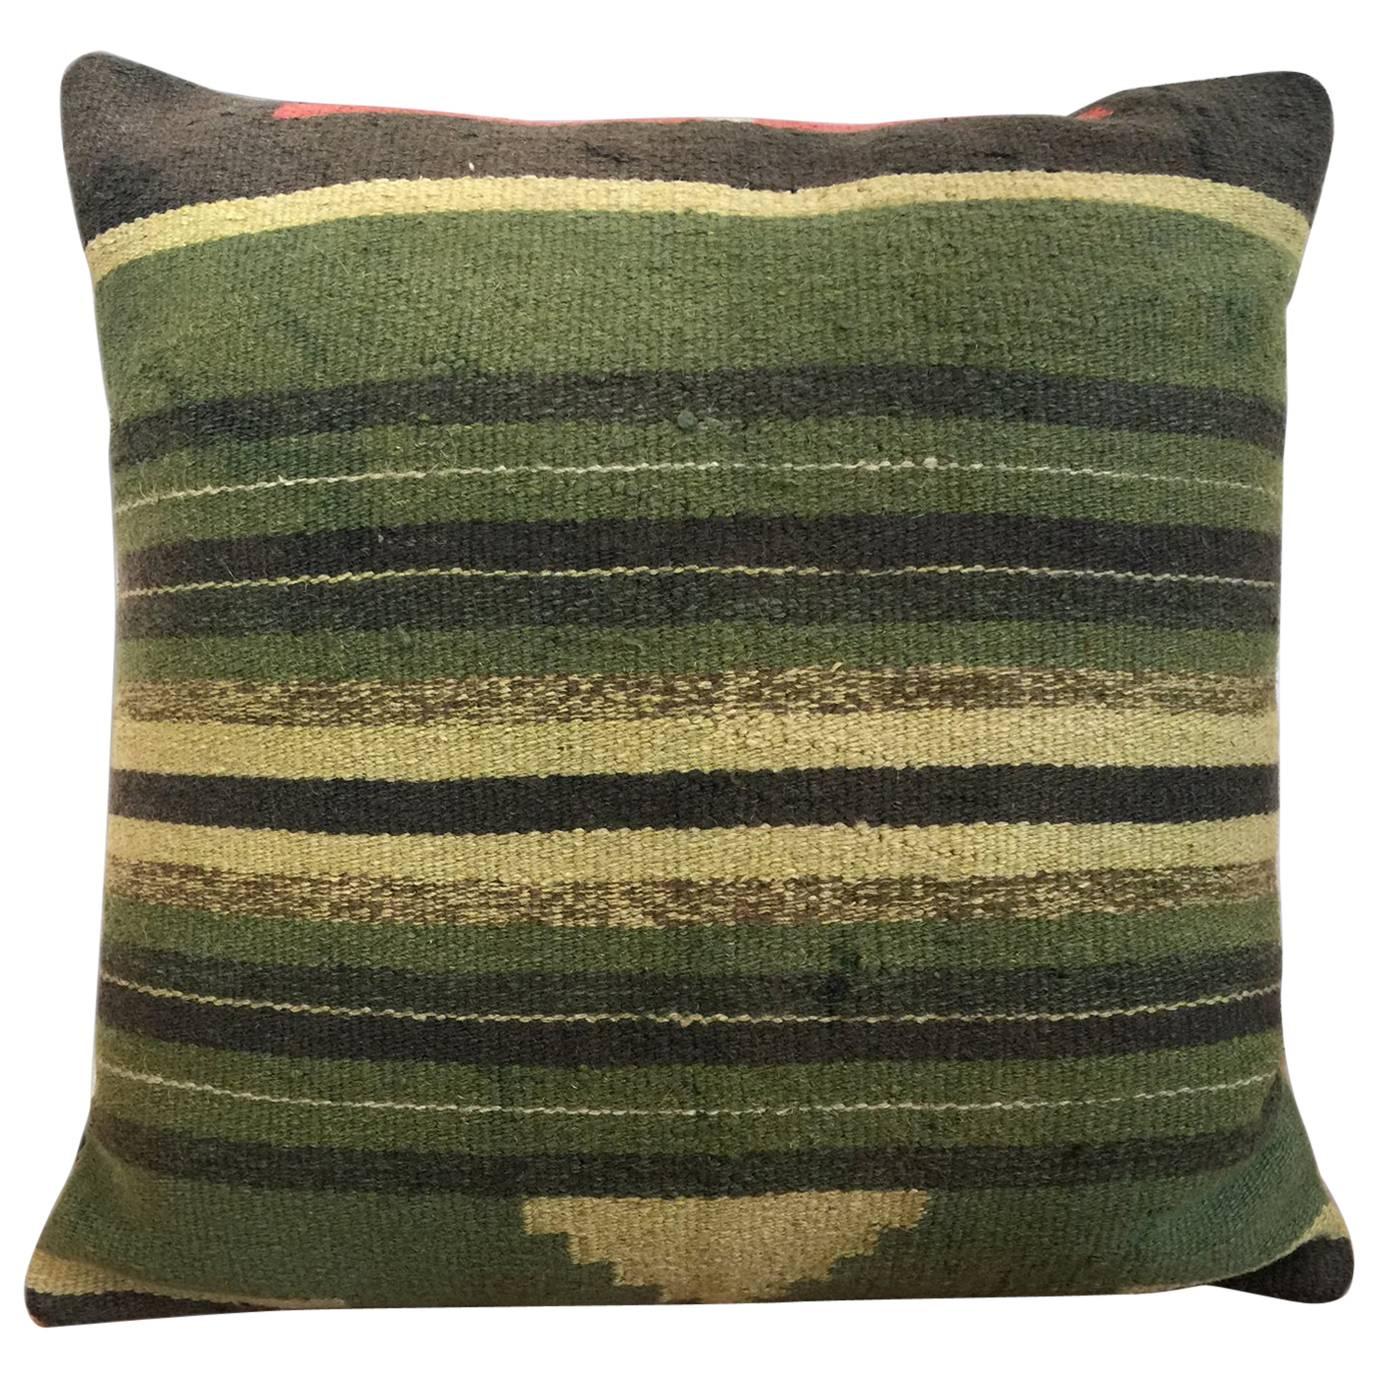 Green Decorative Pillows Hand Woven Kilim Decorative Pillow Bench Cushion Cover 